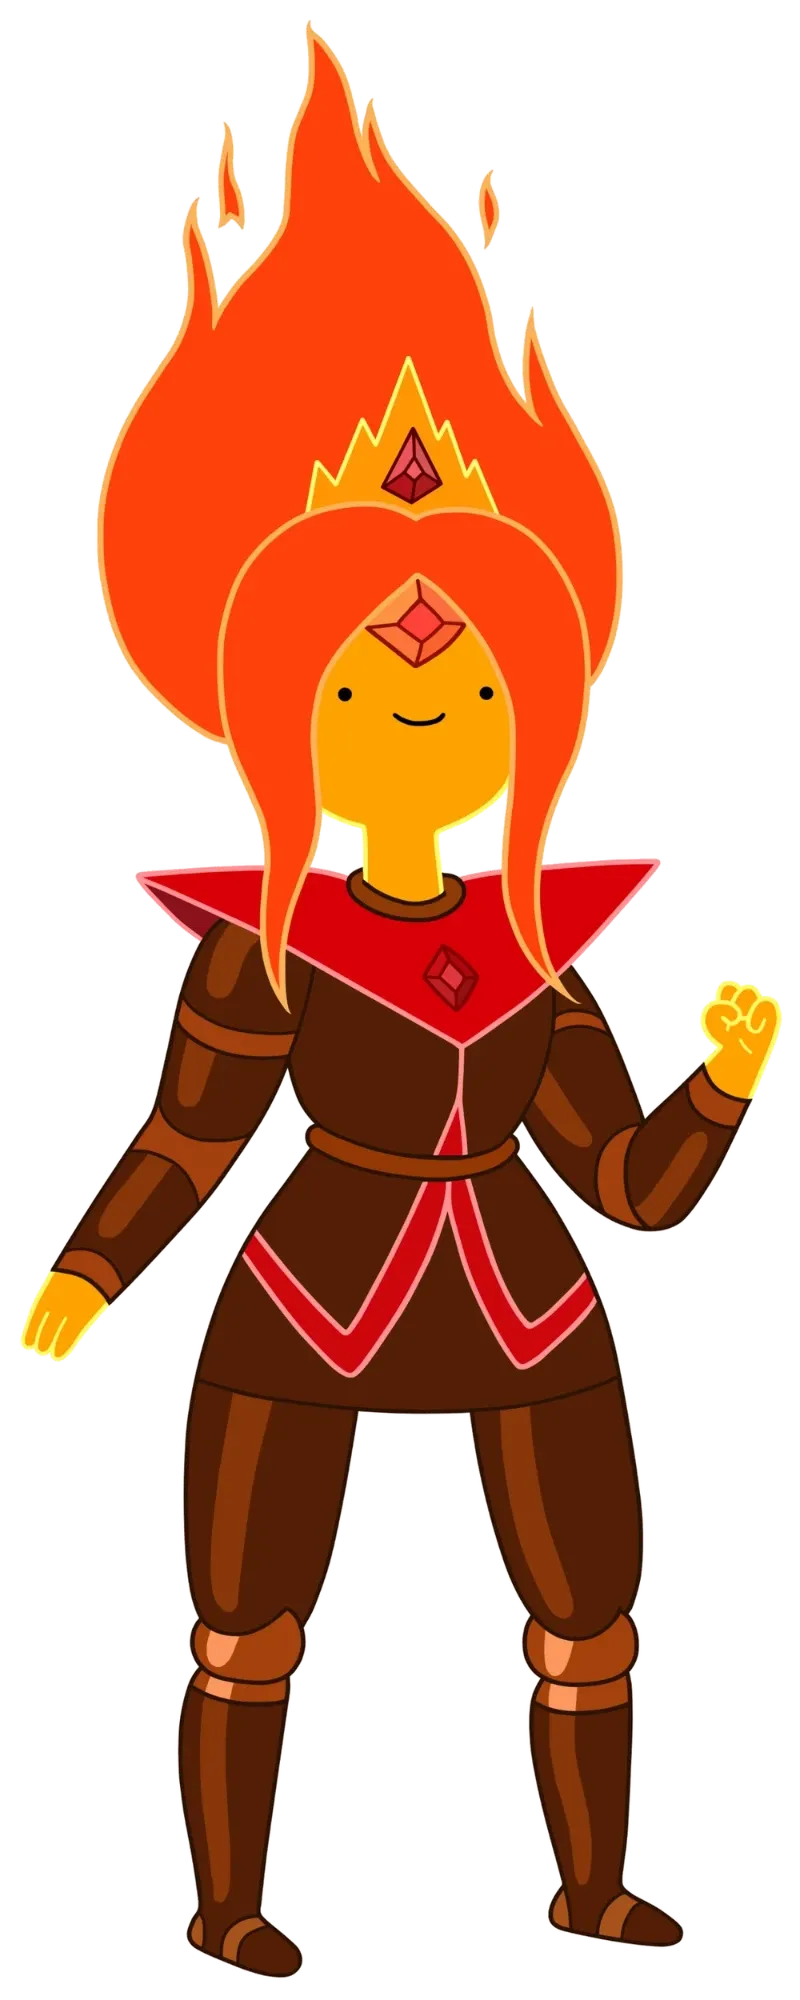 Avatar of Flame Princess